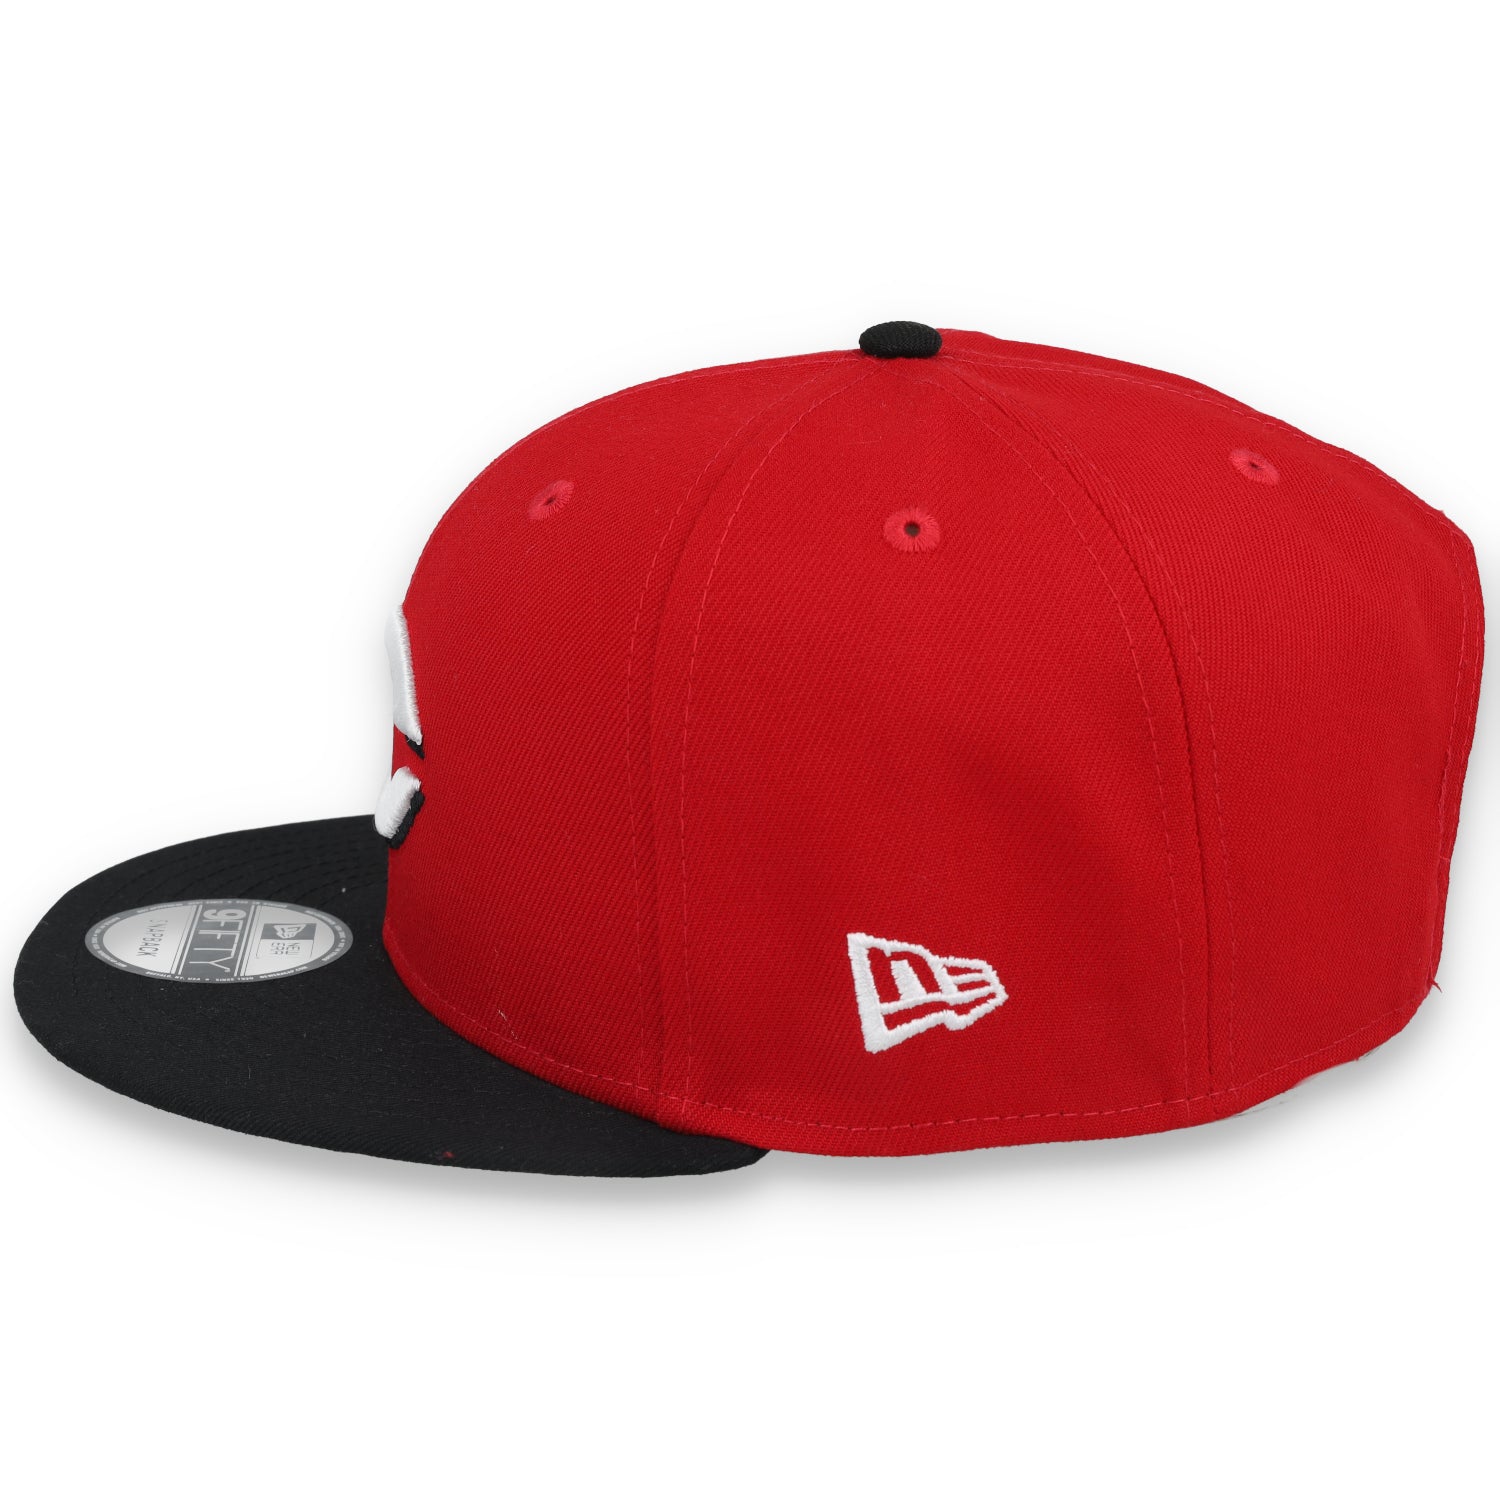 New Era Cincinnati Reds On Field Alternative 9FIFTY Snapback hat